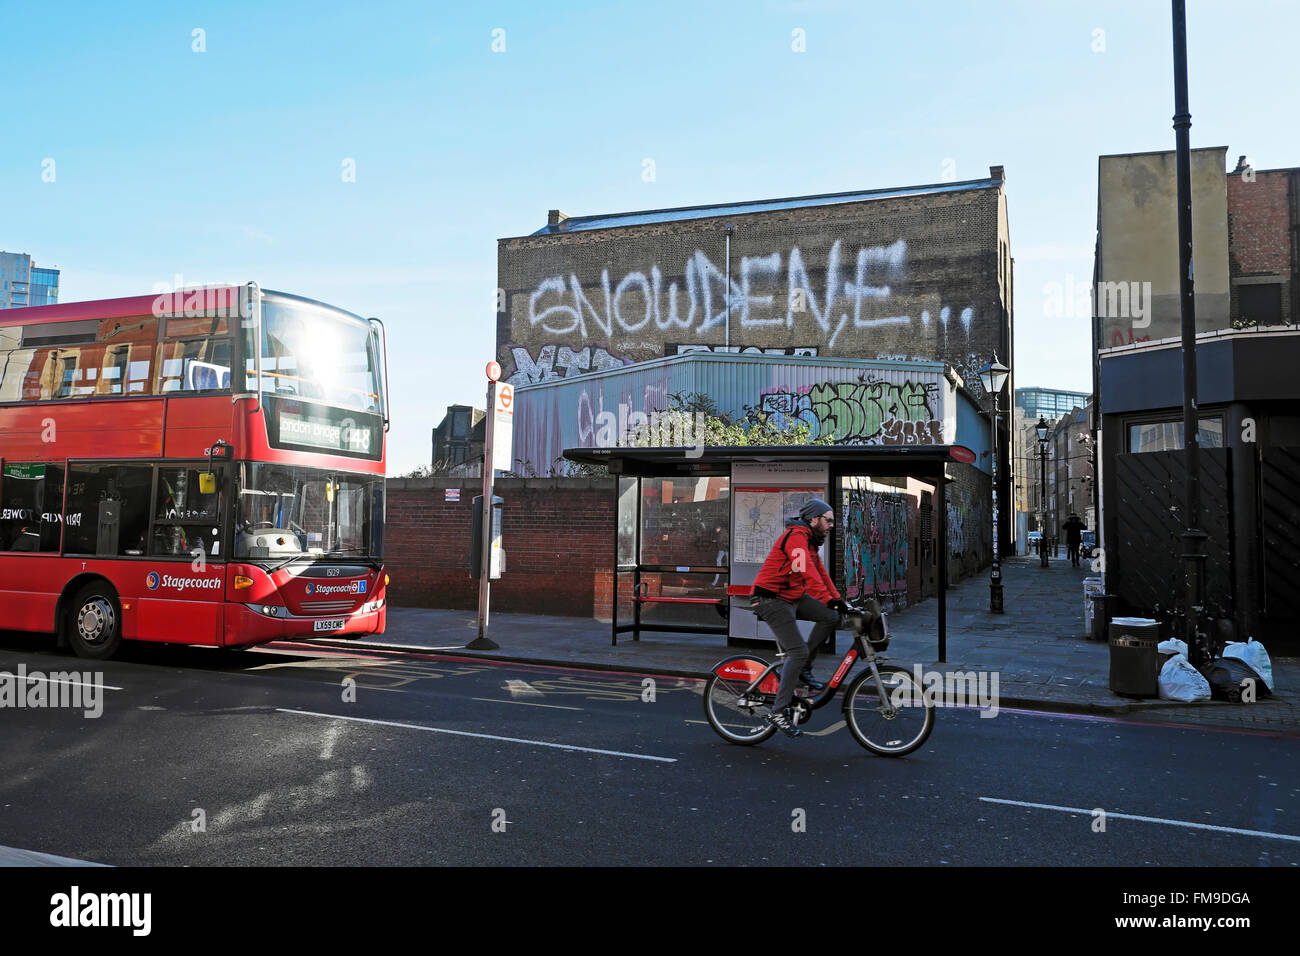 Cyclist and bus passing Edward Snowden graffiti in Shoreditch street London UK  KATHY DEWITT Stock Photo